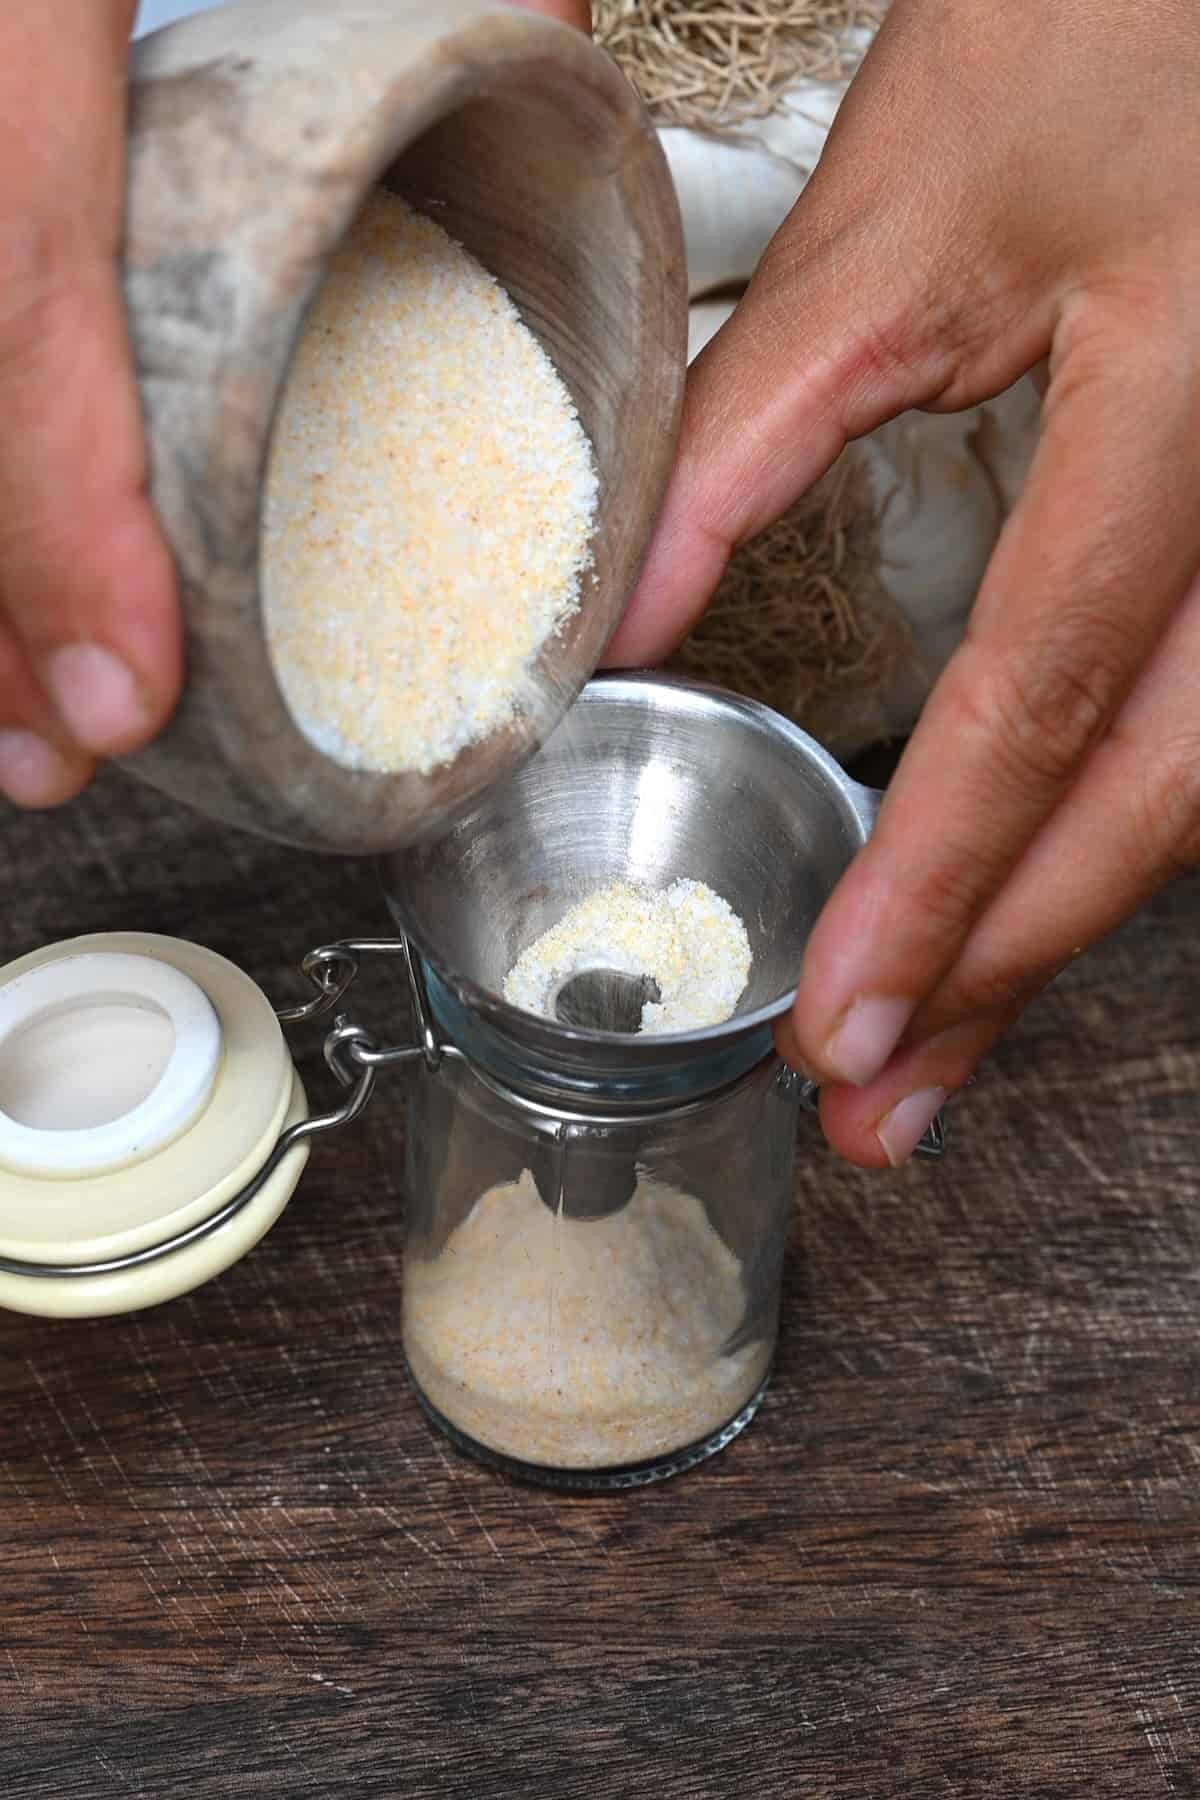 Placing garlic salt in a spice jar